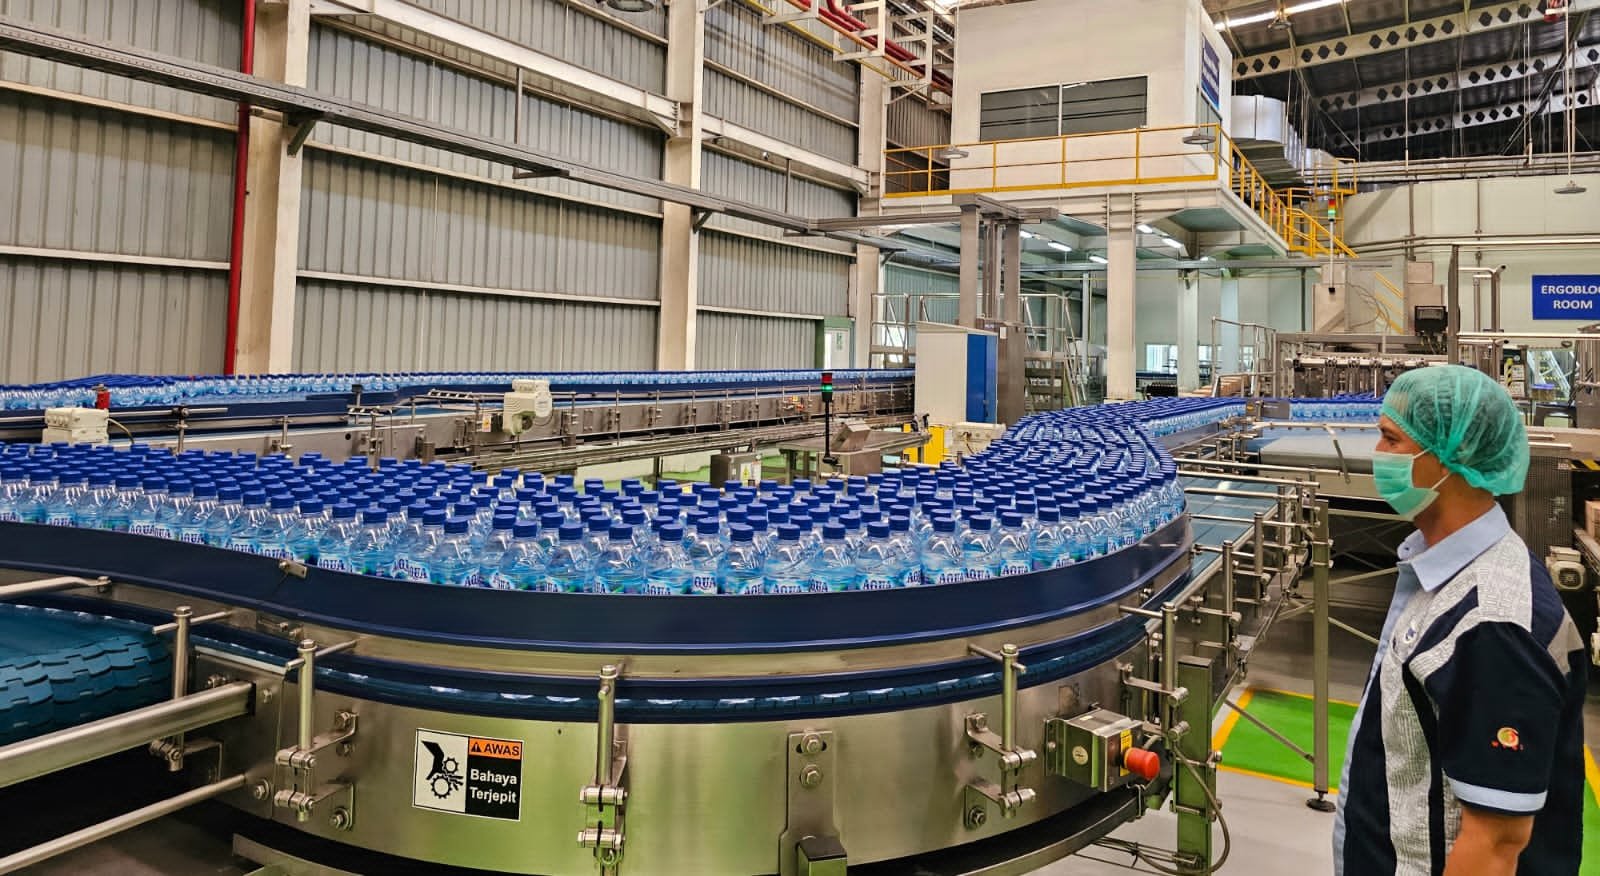 Pabrik AQUA Cianjur Hadirkan Air Minum dalam Kemasan yang Sehat dari Sumber Air Pegunungan Murni